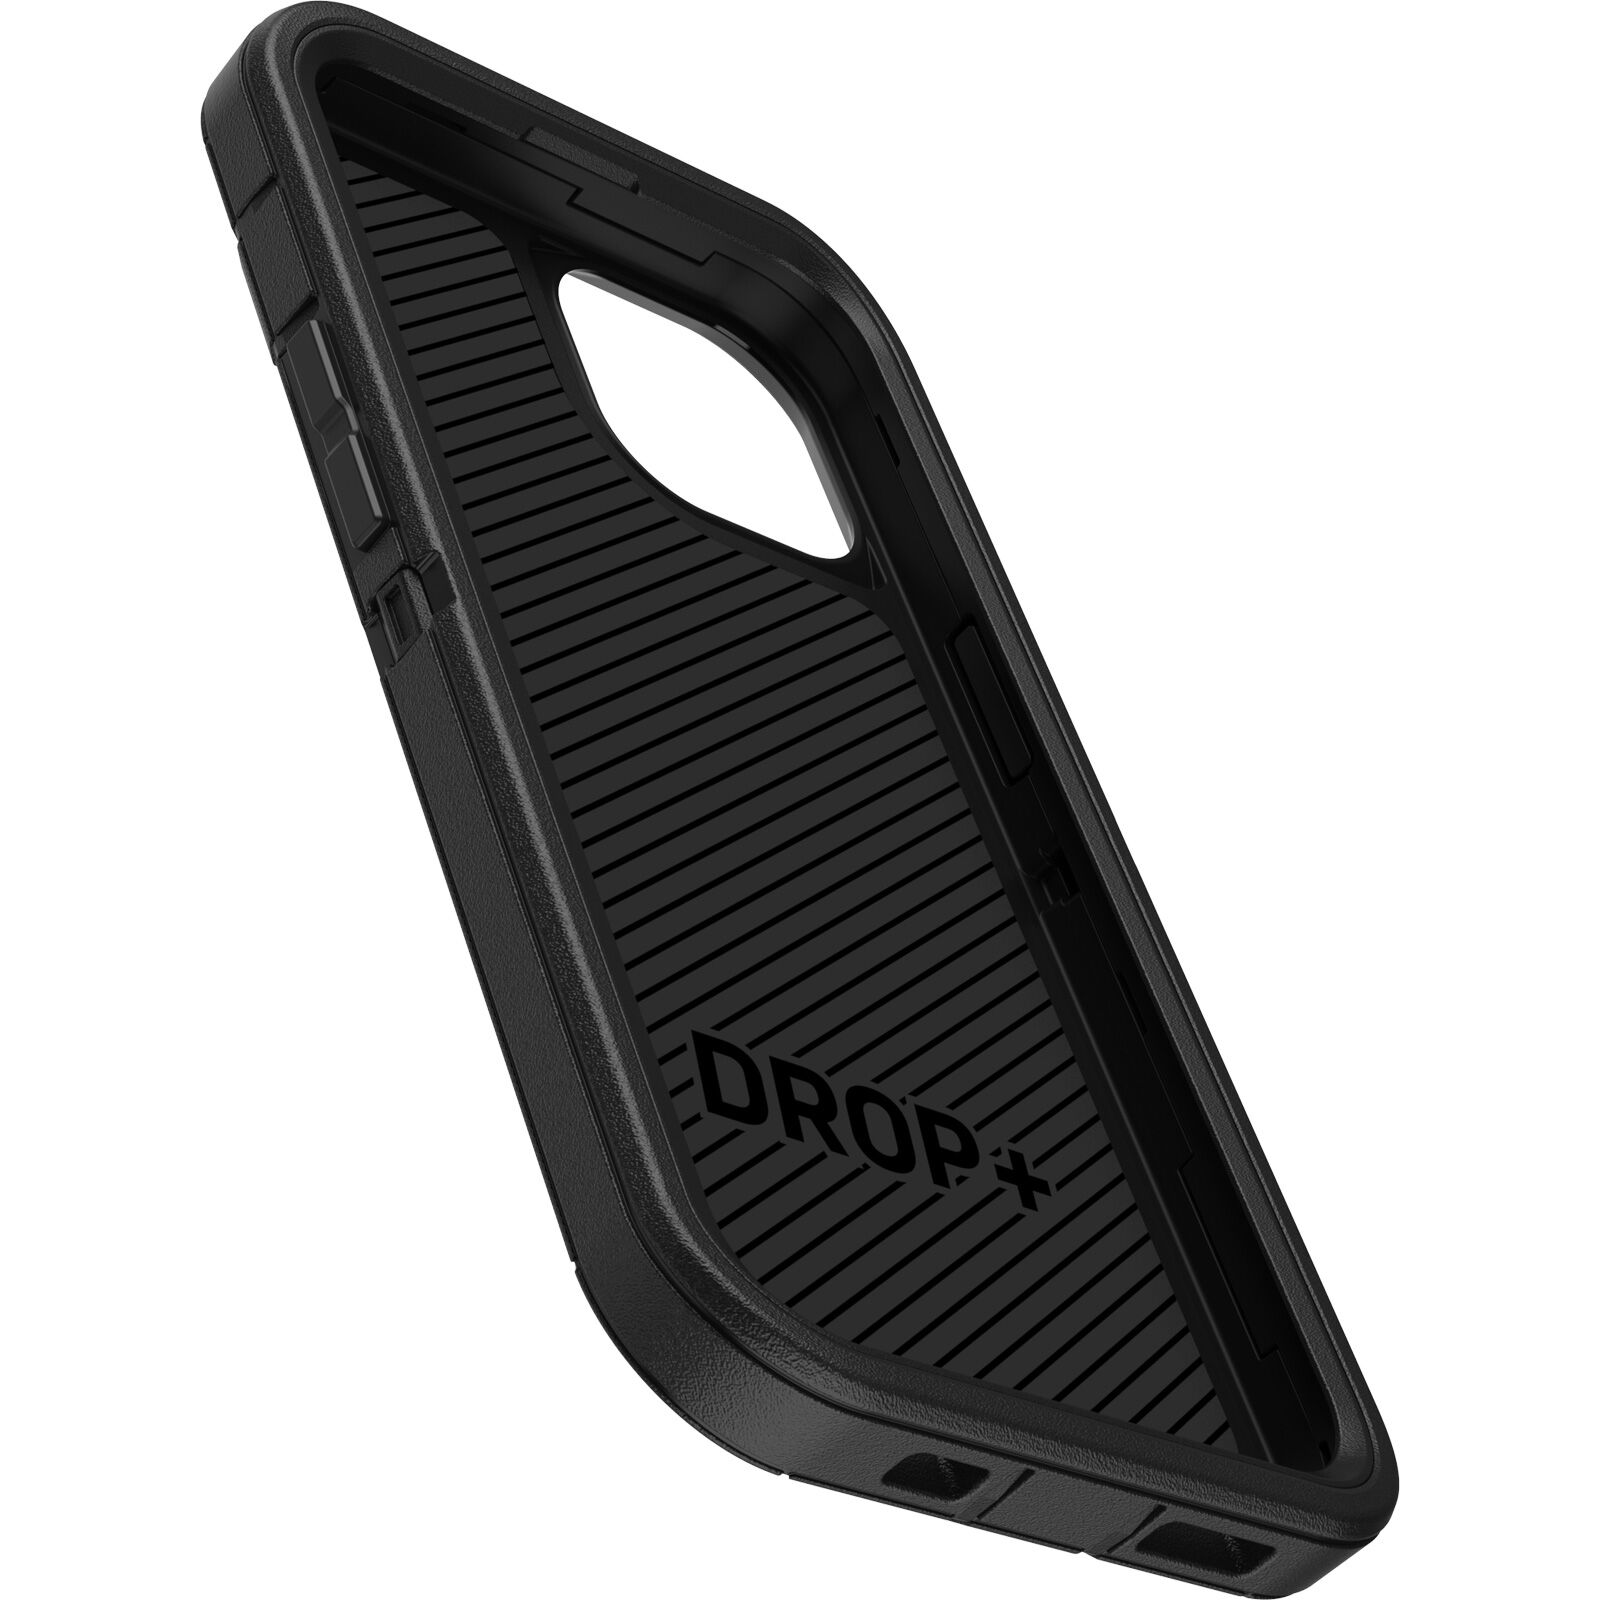 OtterBox Defender - Carcasa para iPhone Xs Max, color negro